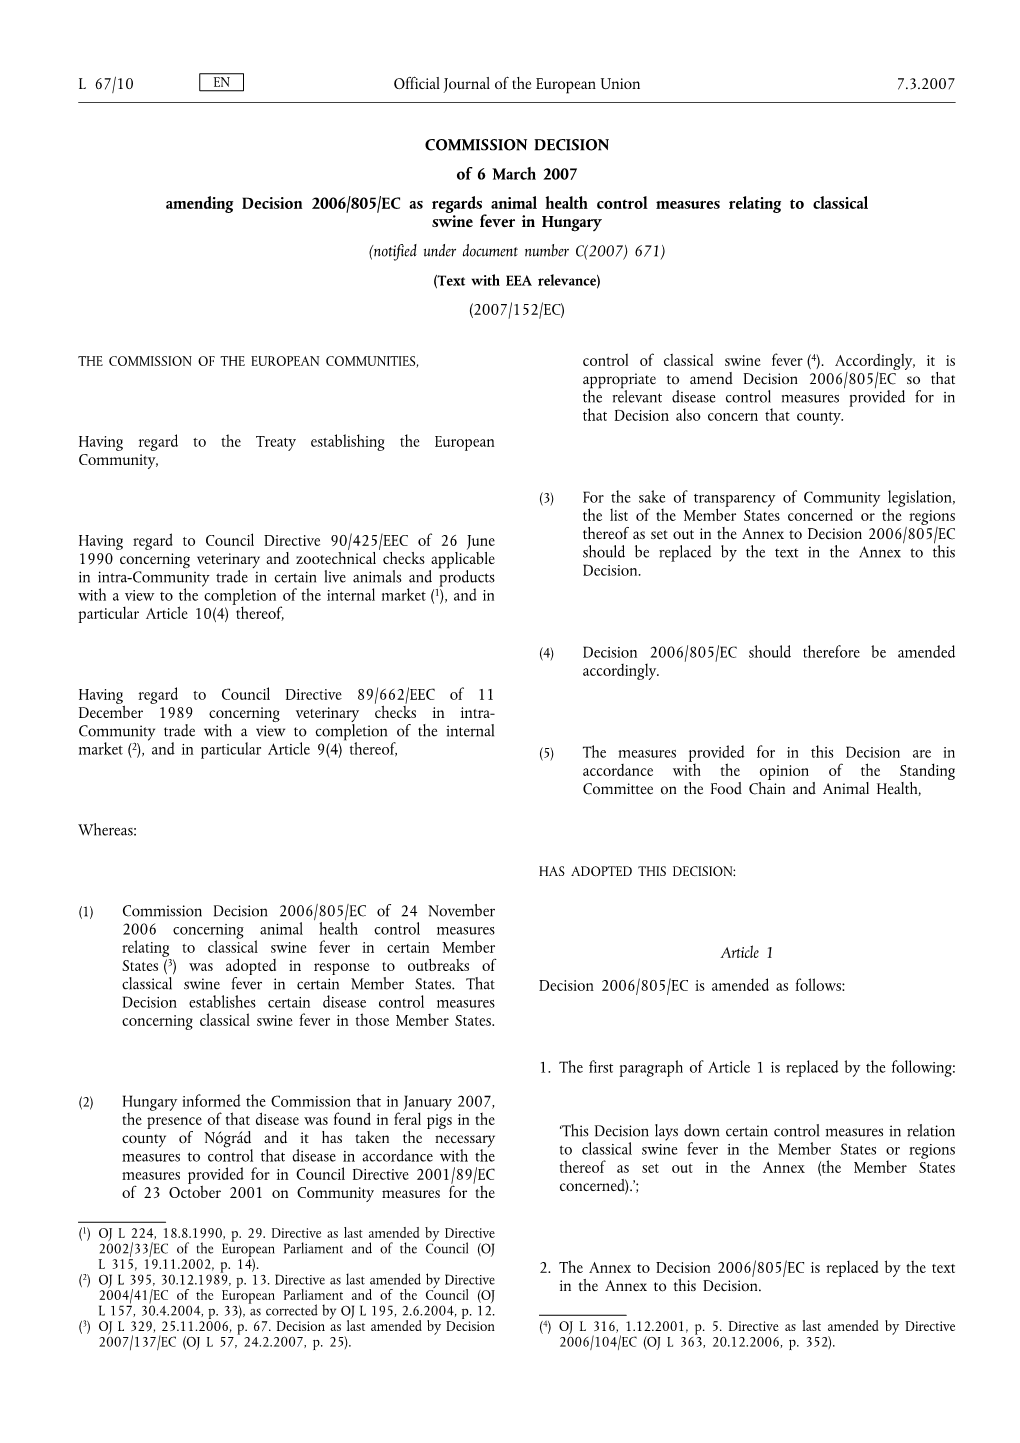 COMMISSION DECISION of 6 March 2007 Amending Decision 2006/805